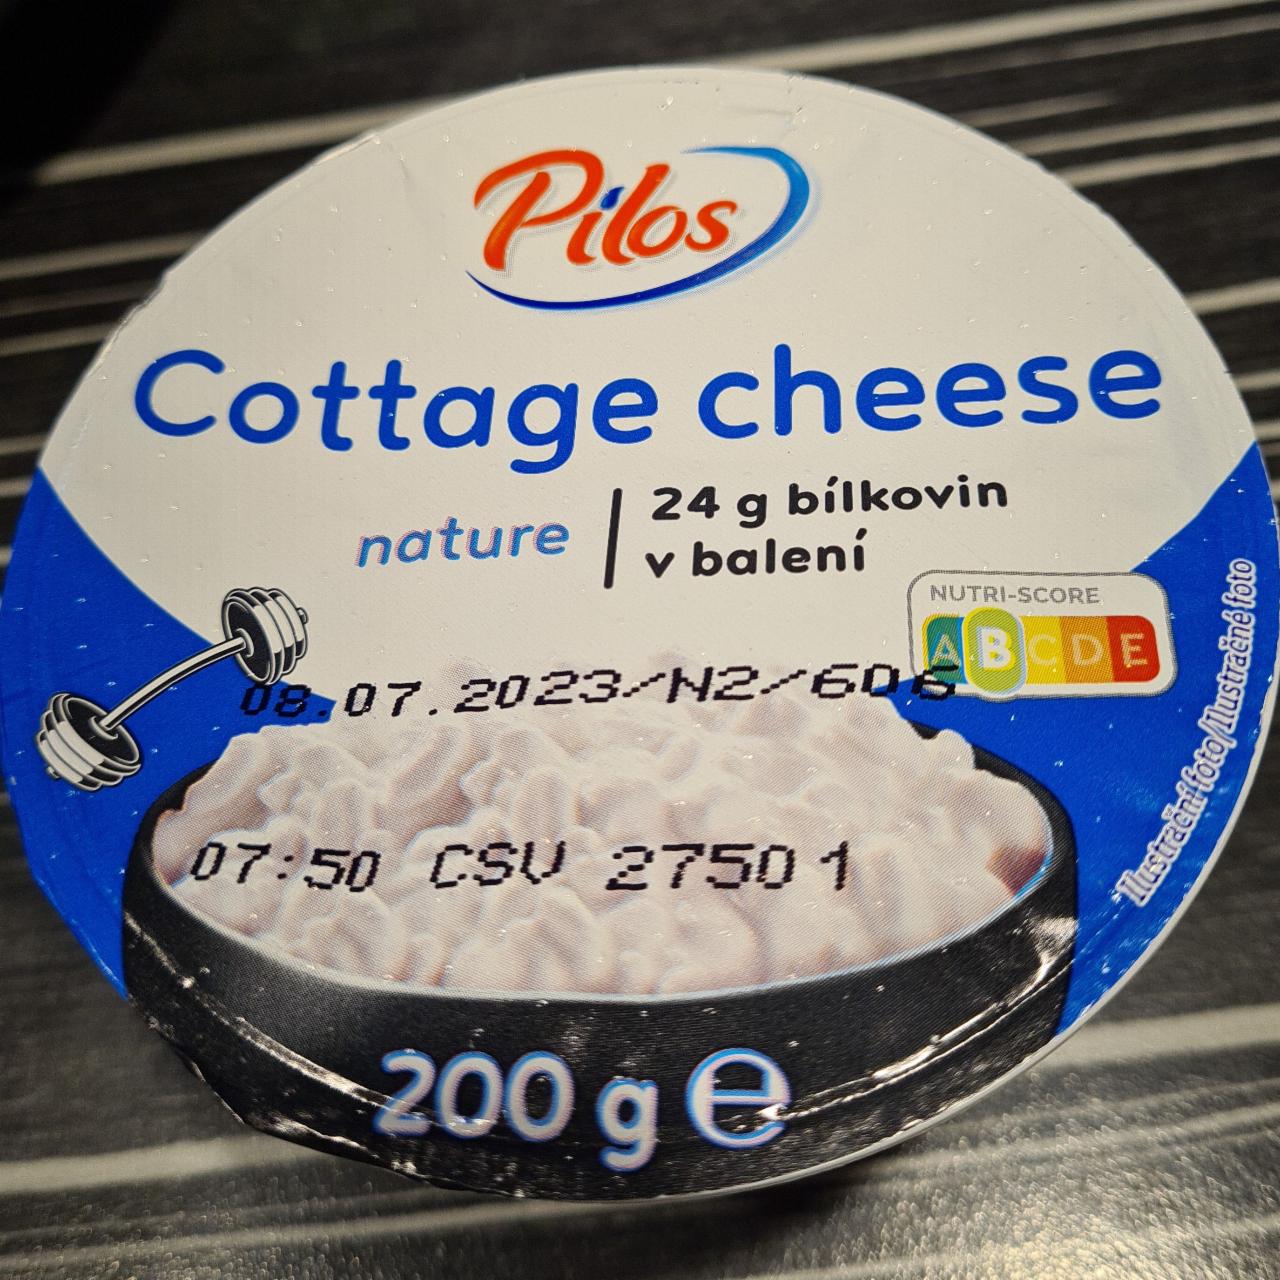 Fotografie - Cottage cheese nature Pilos